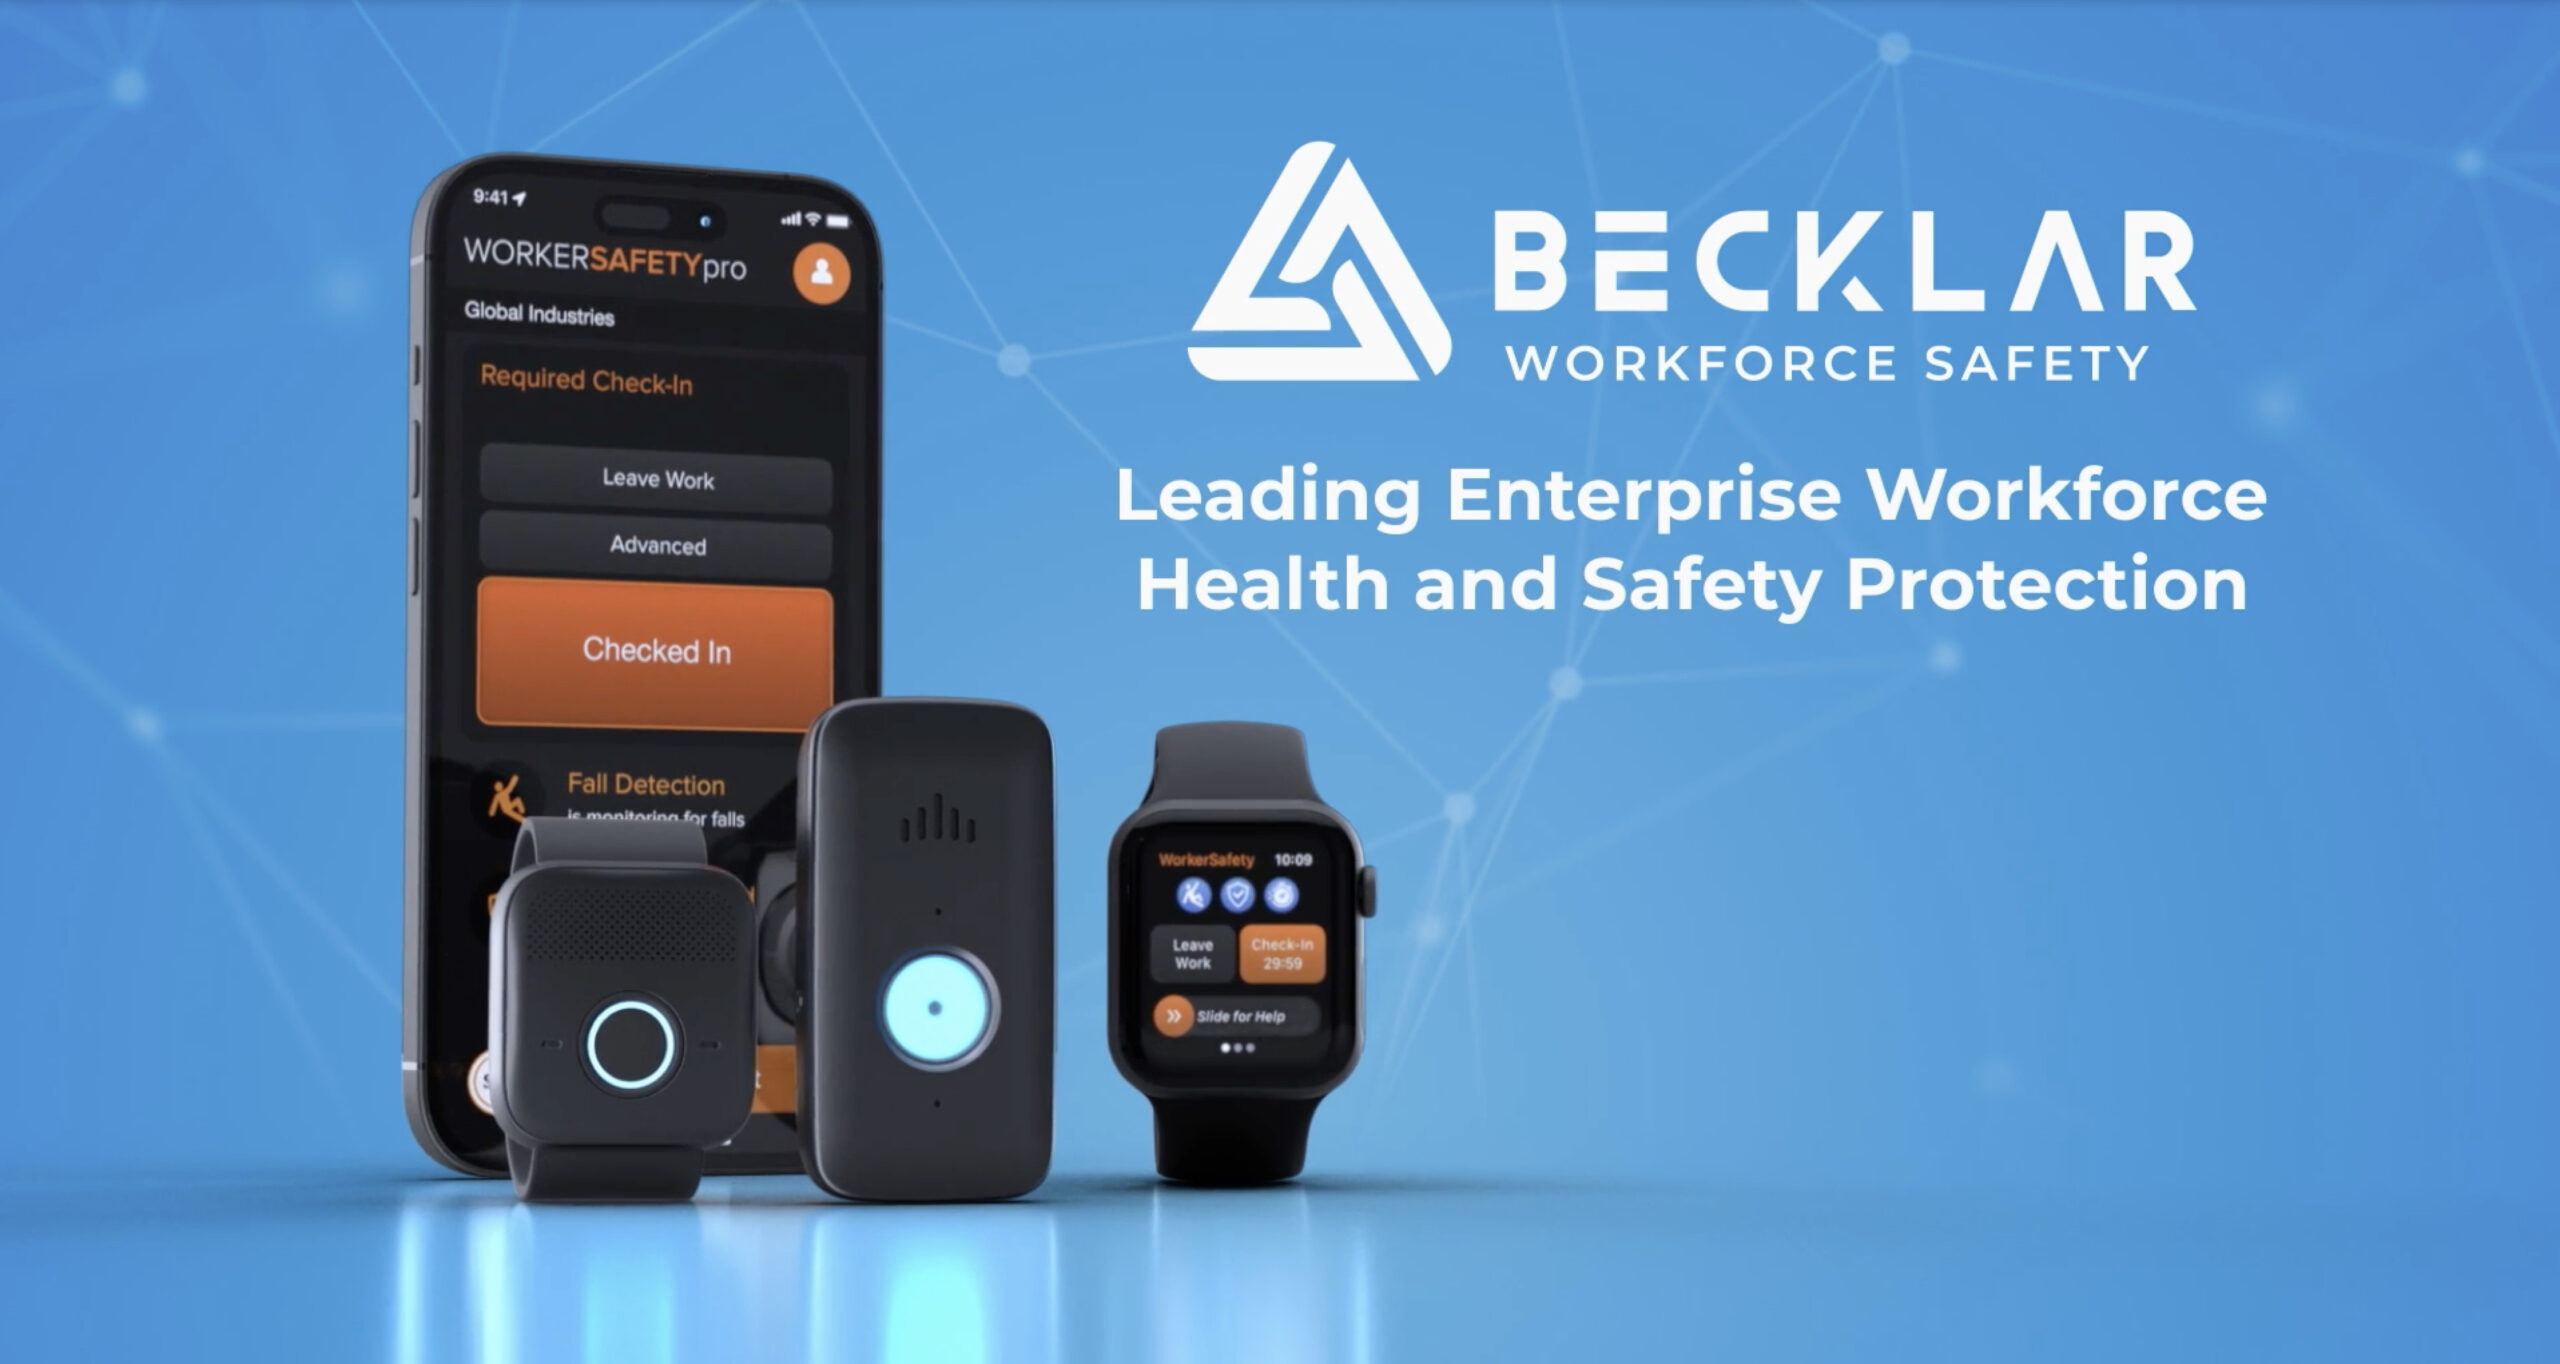 Becklar Workforce Safety Leading Enterprise Workforce Health and Safety Protection